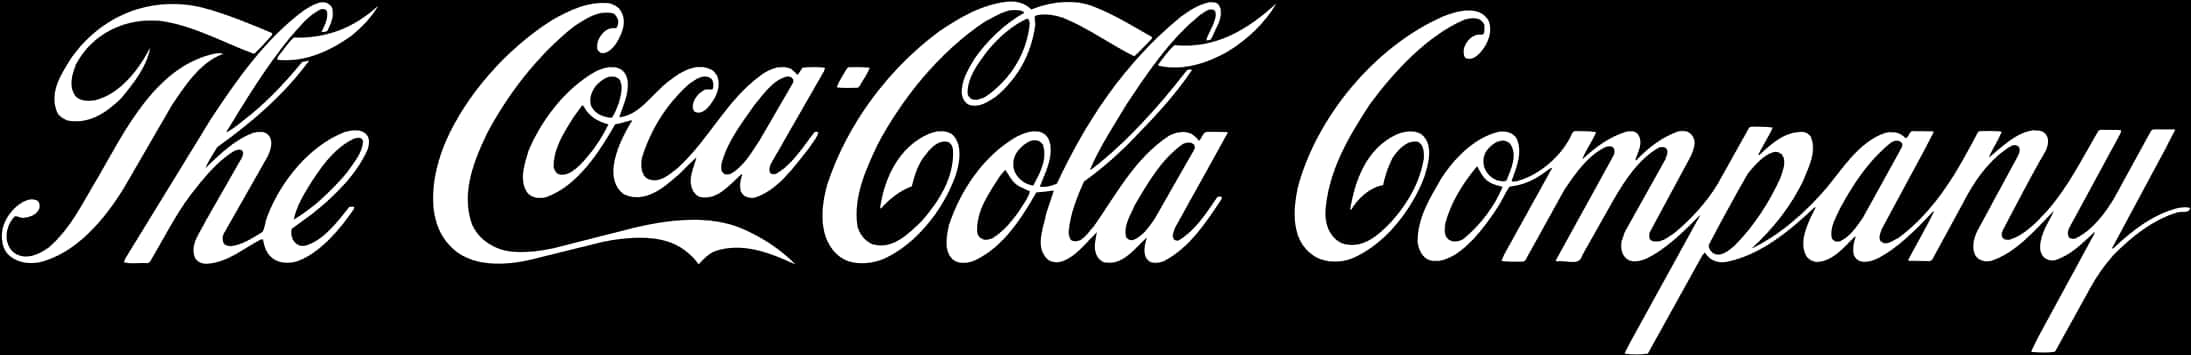 Coca Cola Company Logo Blackand White PNG